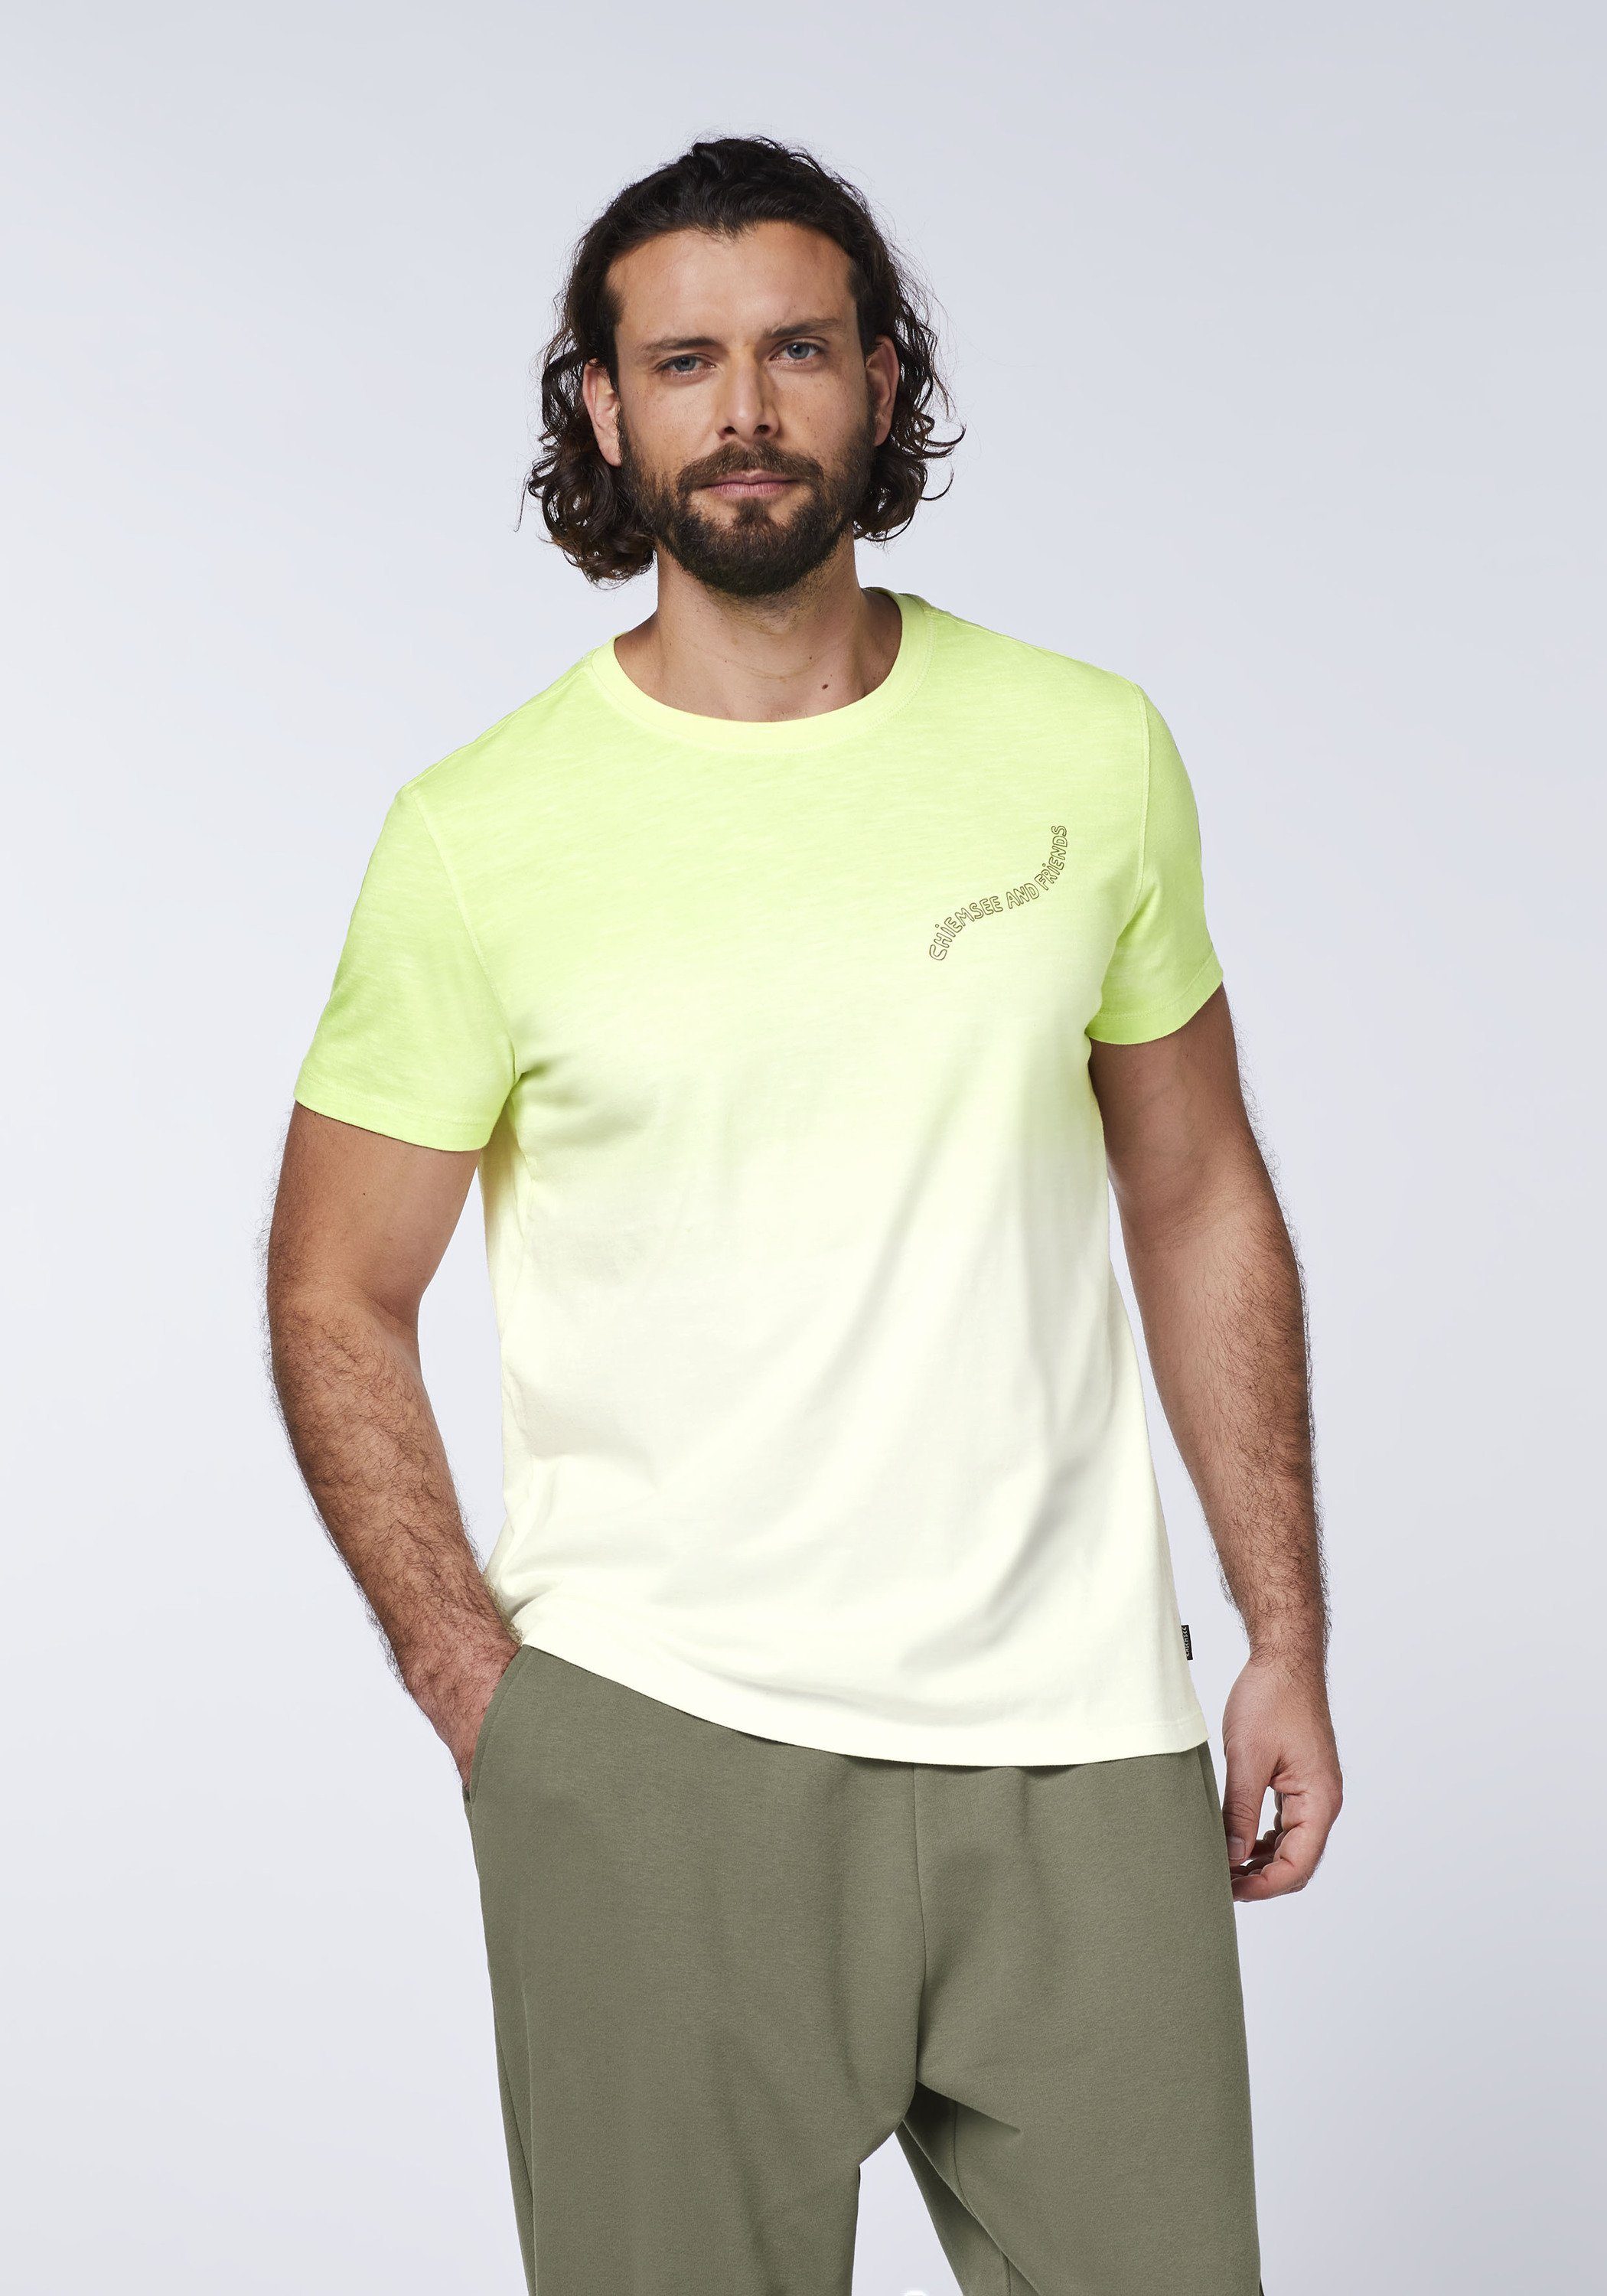 im Light Print-Shirt 1 6268 Green/Dark T-Shirt Farbverlauf Green mit Slub-Yarn-Textur Chiemsee